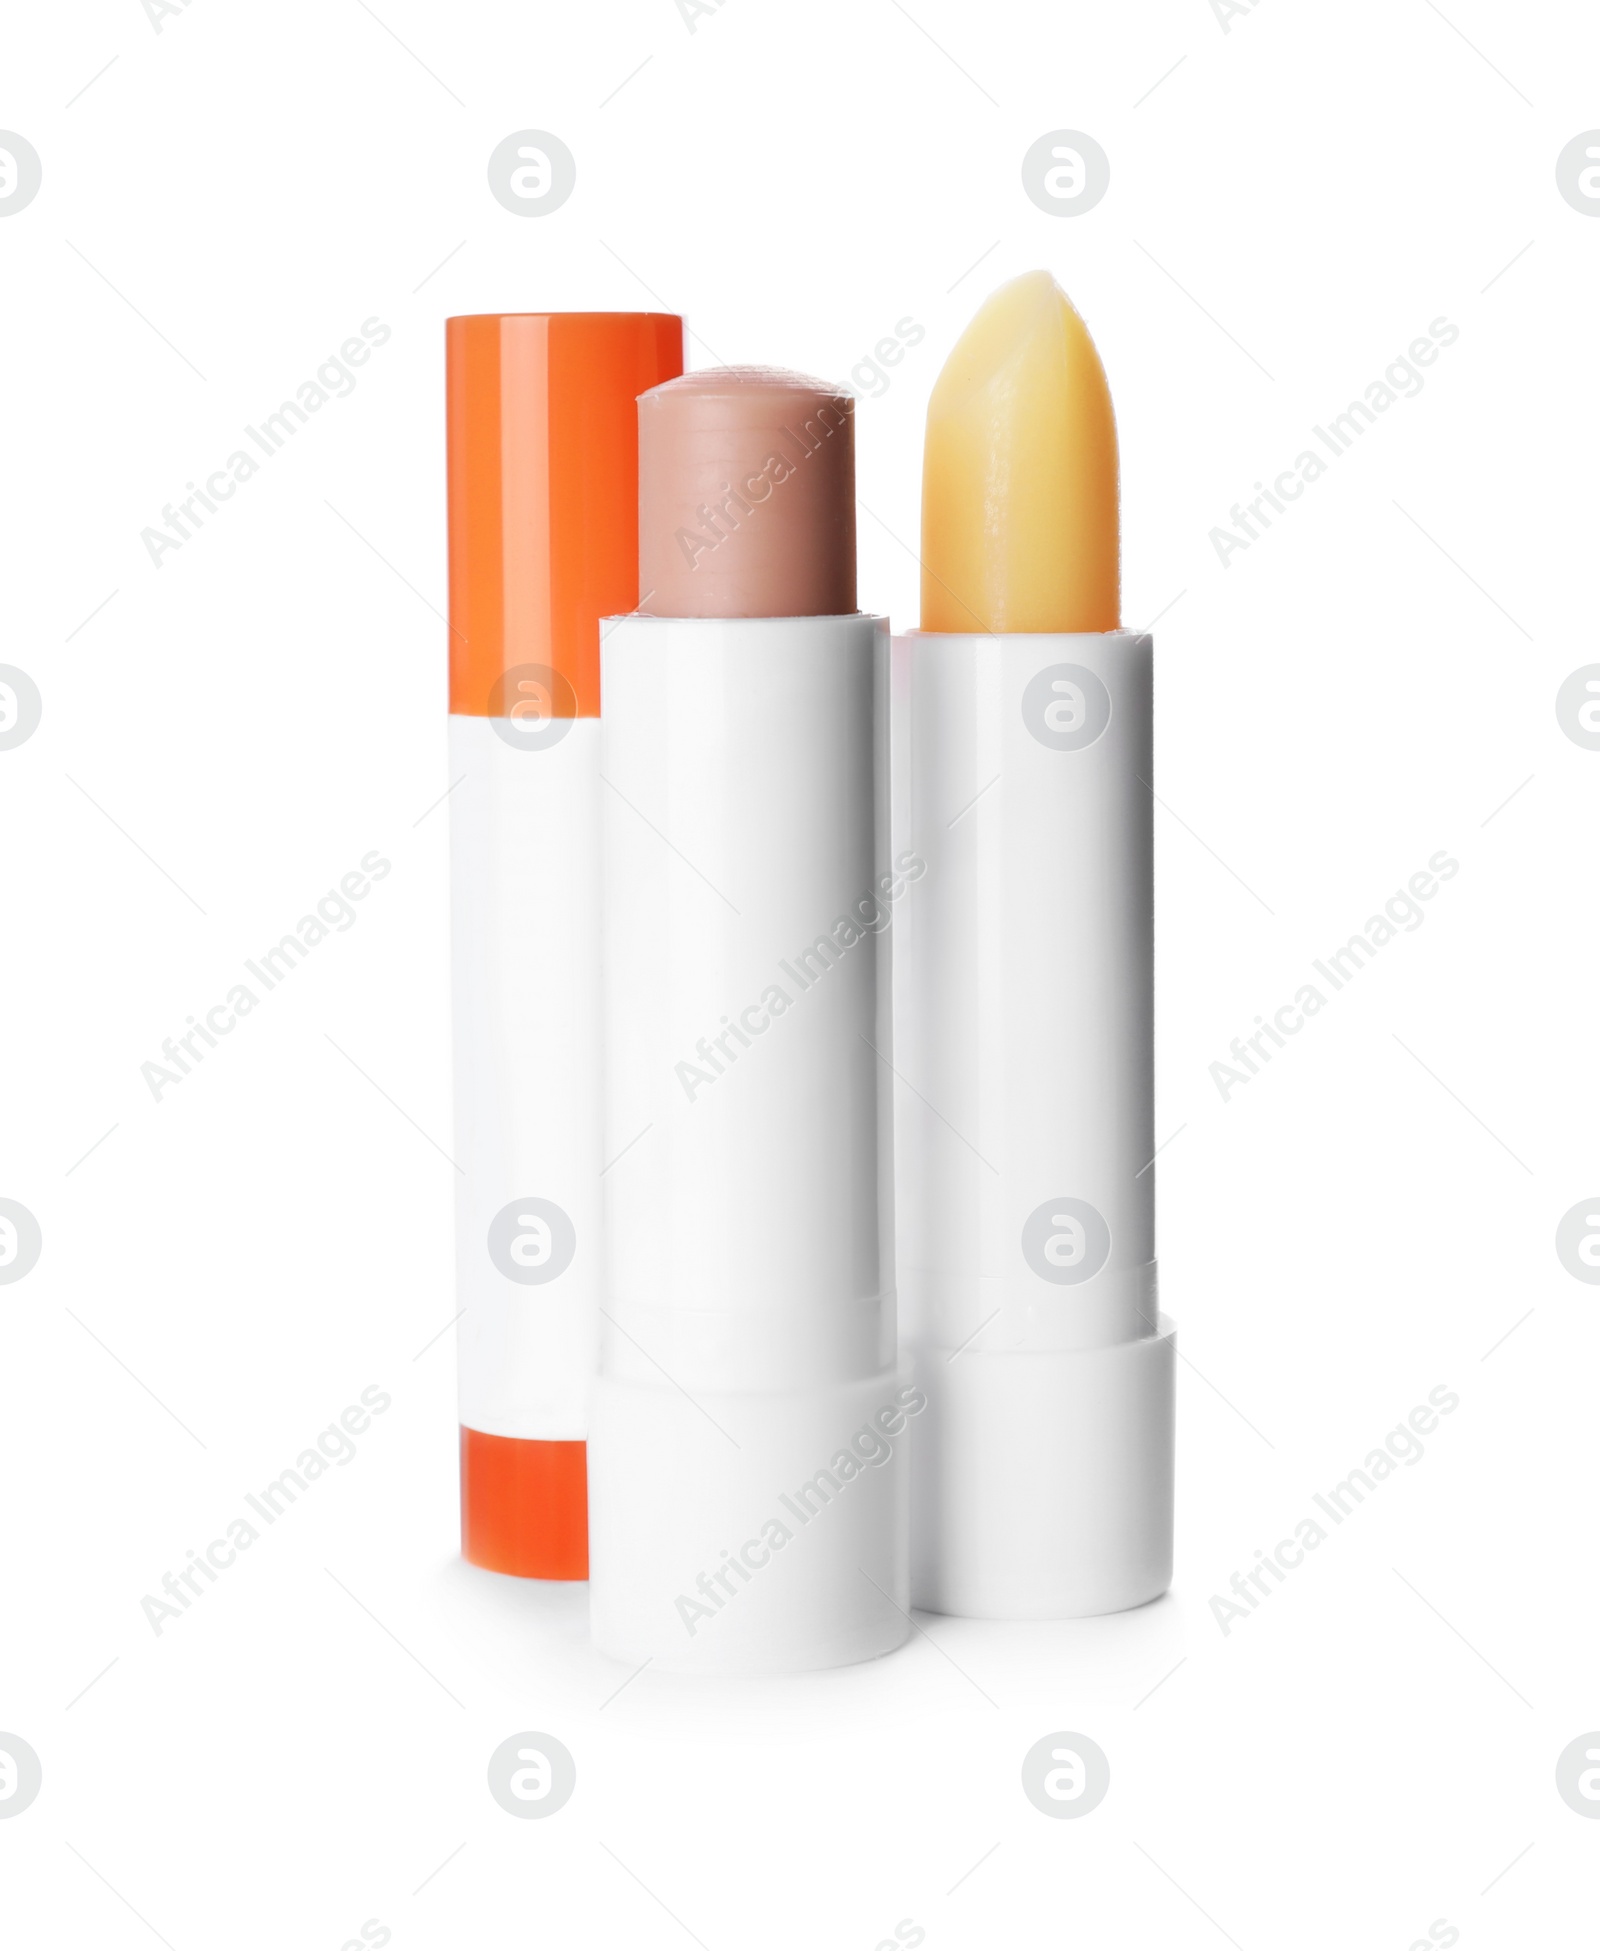 Photo of Sun protection lip balms on white background